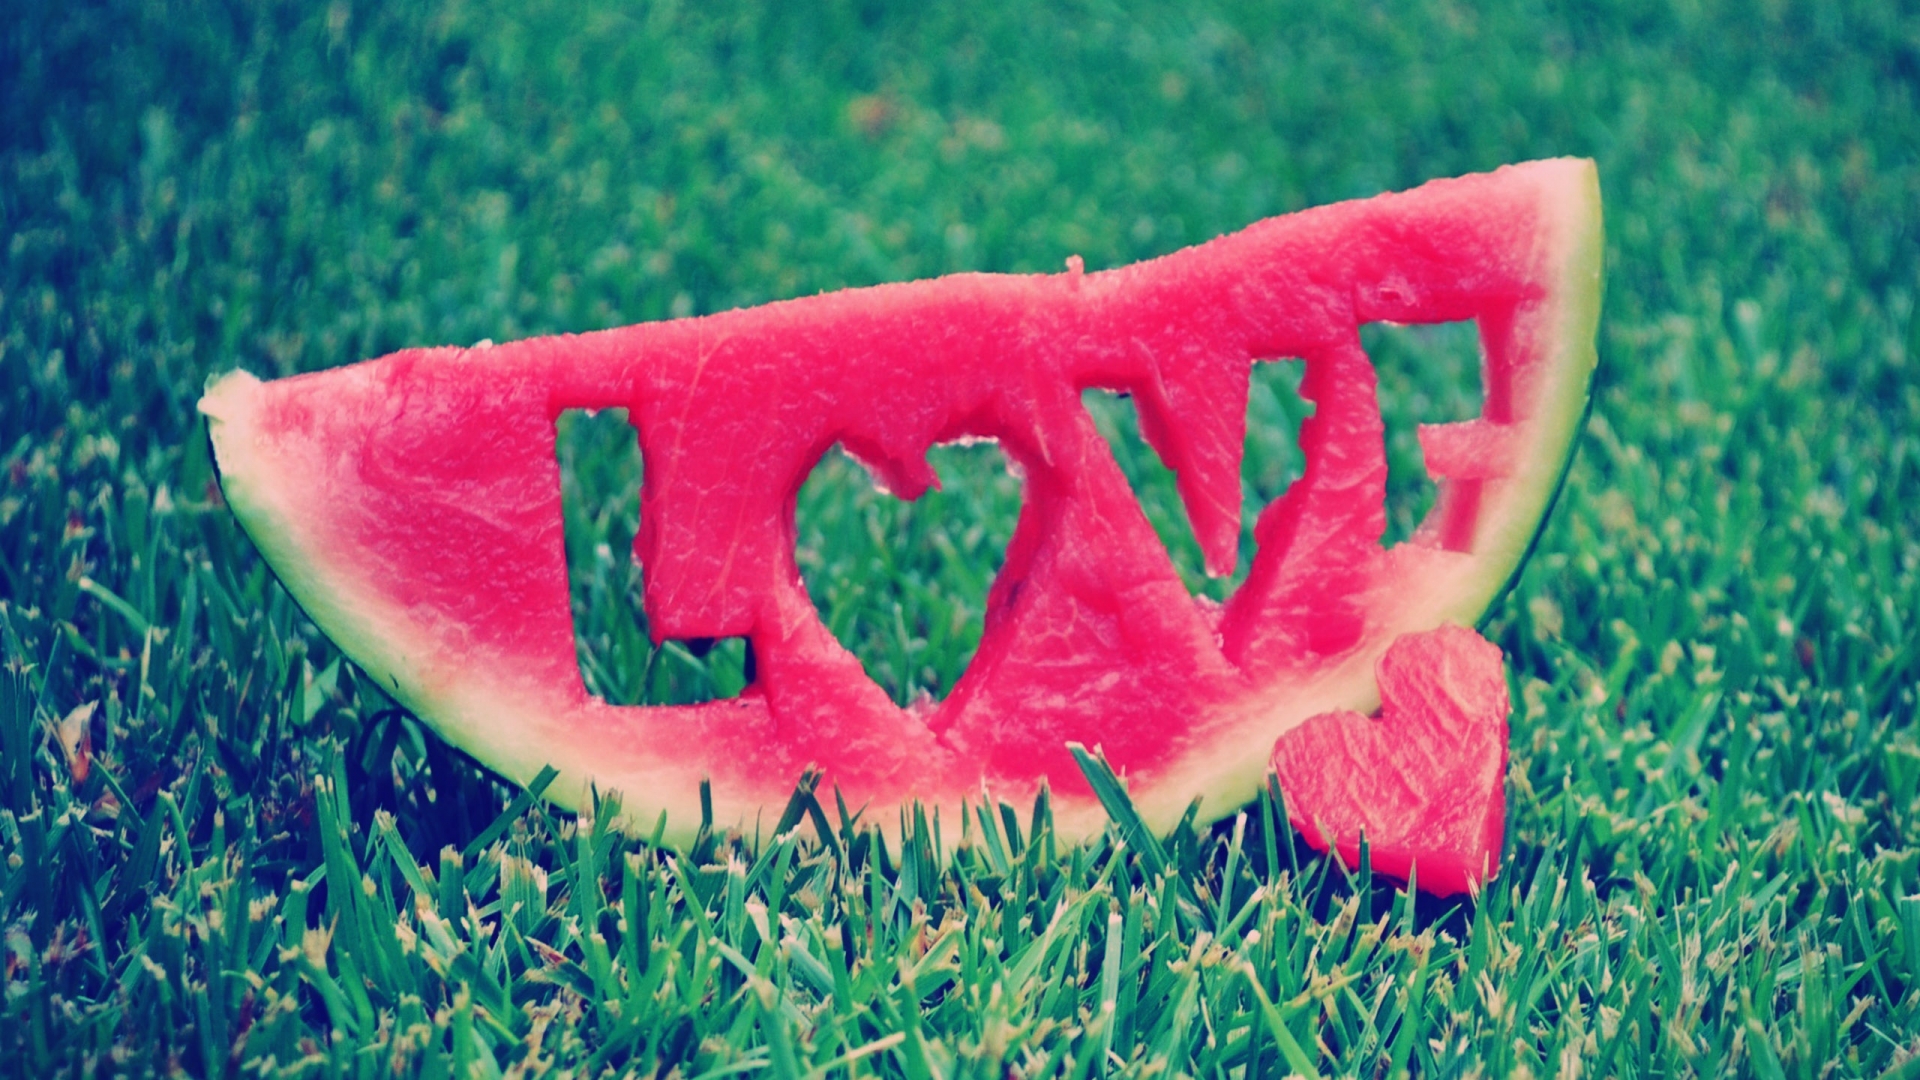 love wallpaper hd full size,watermelon,melon,citrullus,green,pink